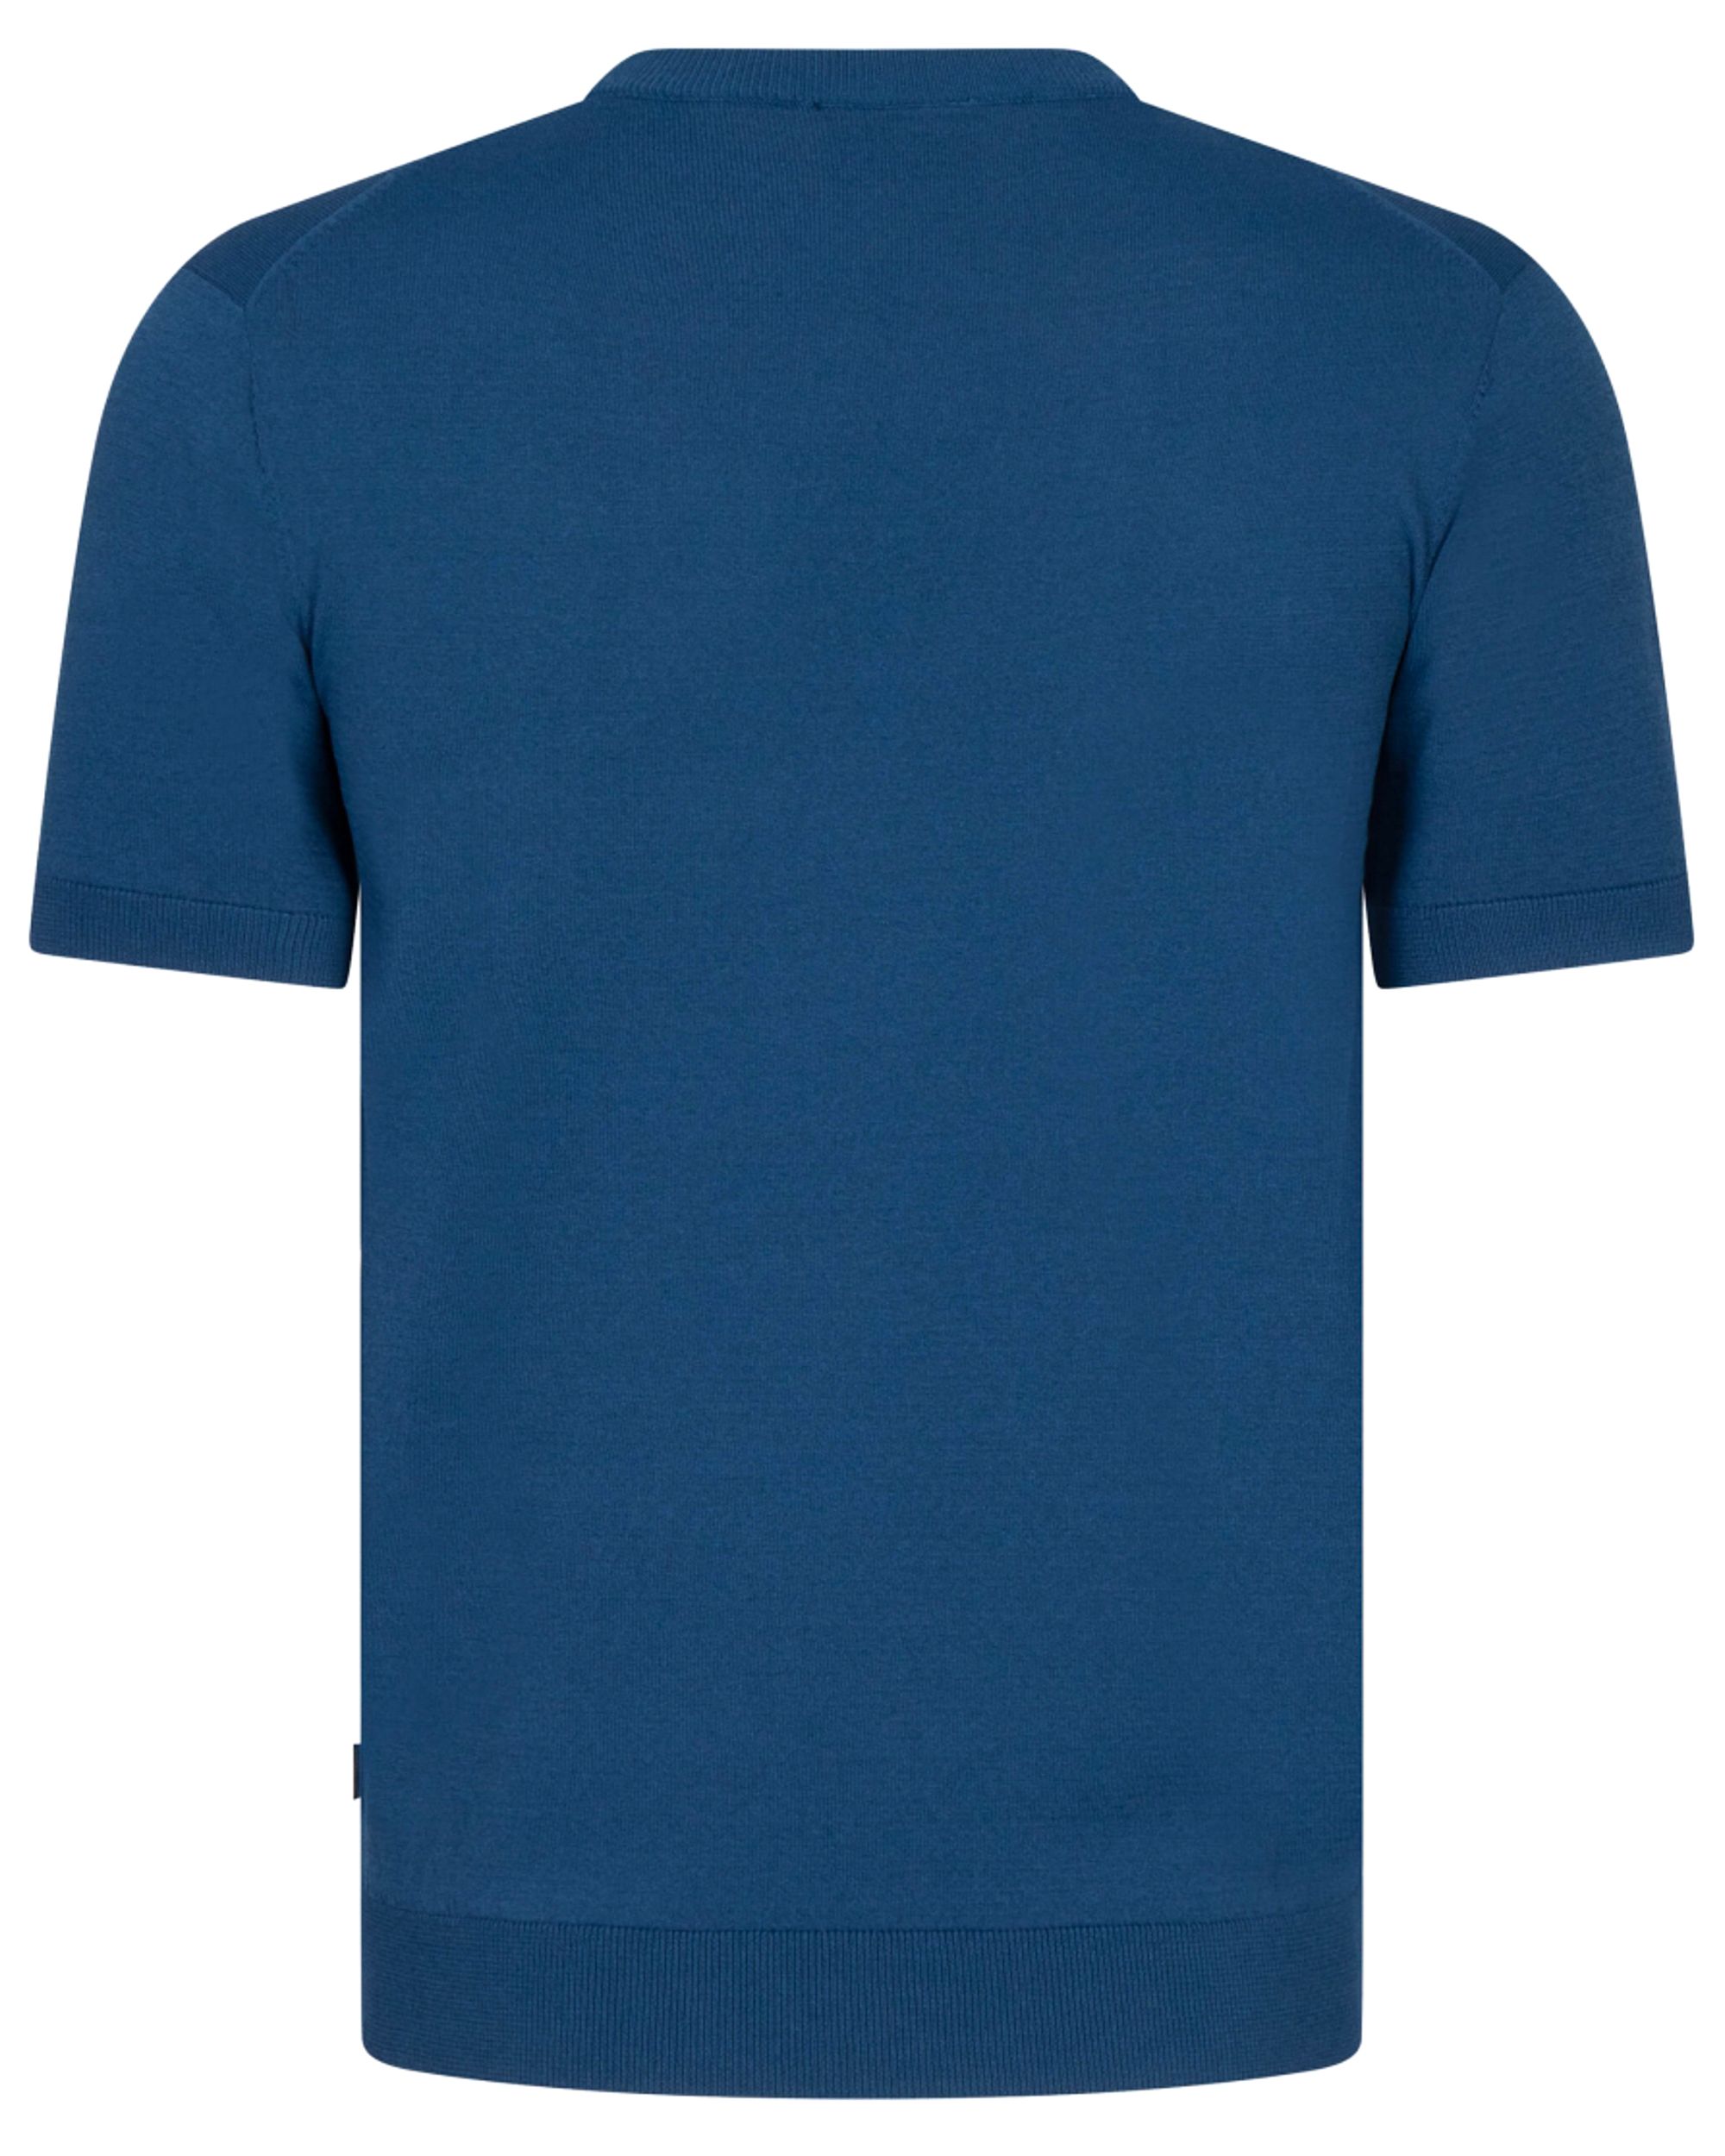 Cavallaro Milo T-shirt KM Blauw 094416-001-L